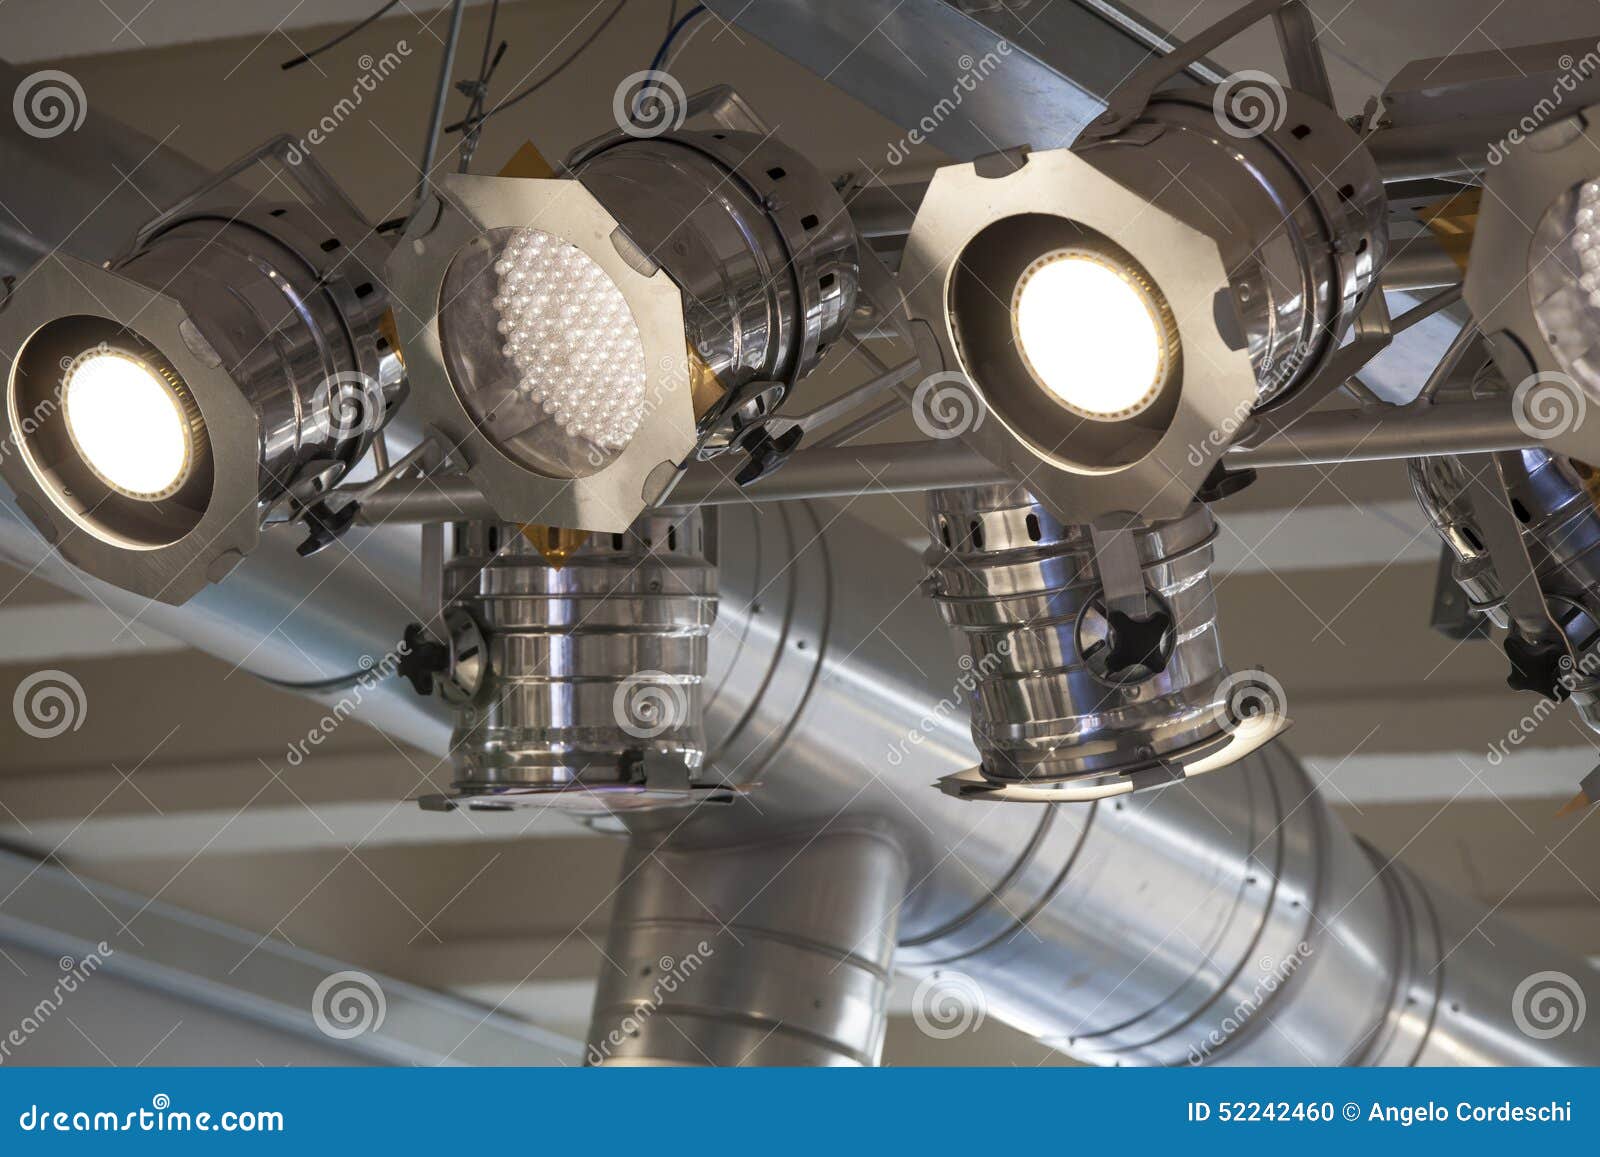 lighting system. spotlights and ceiling lights.